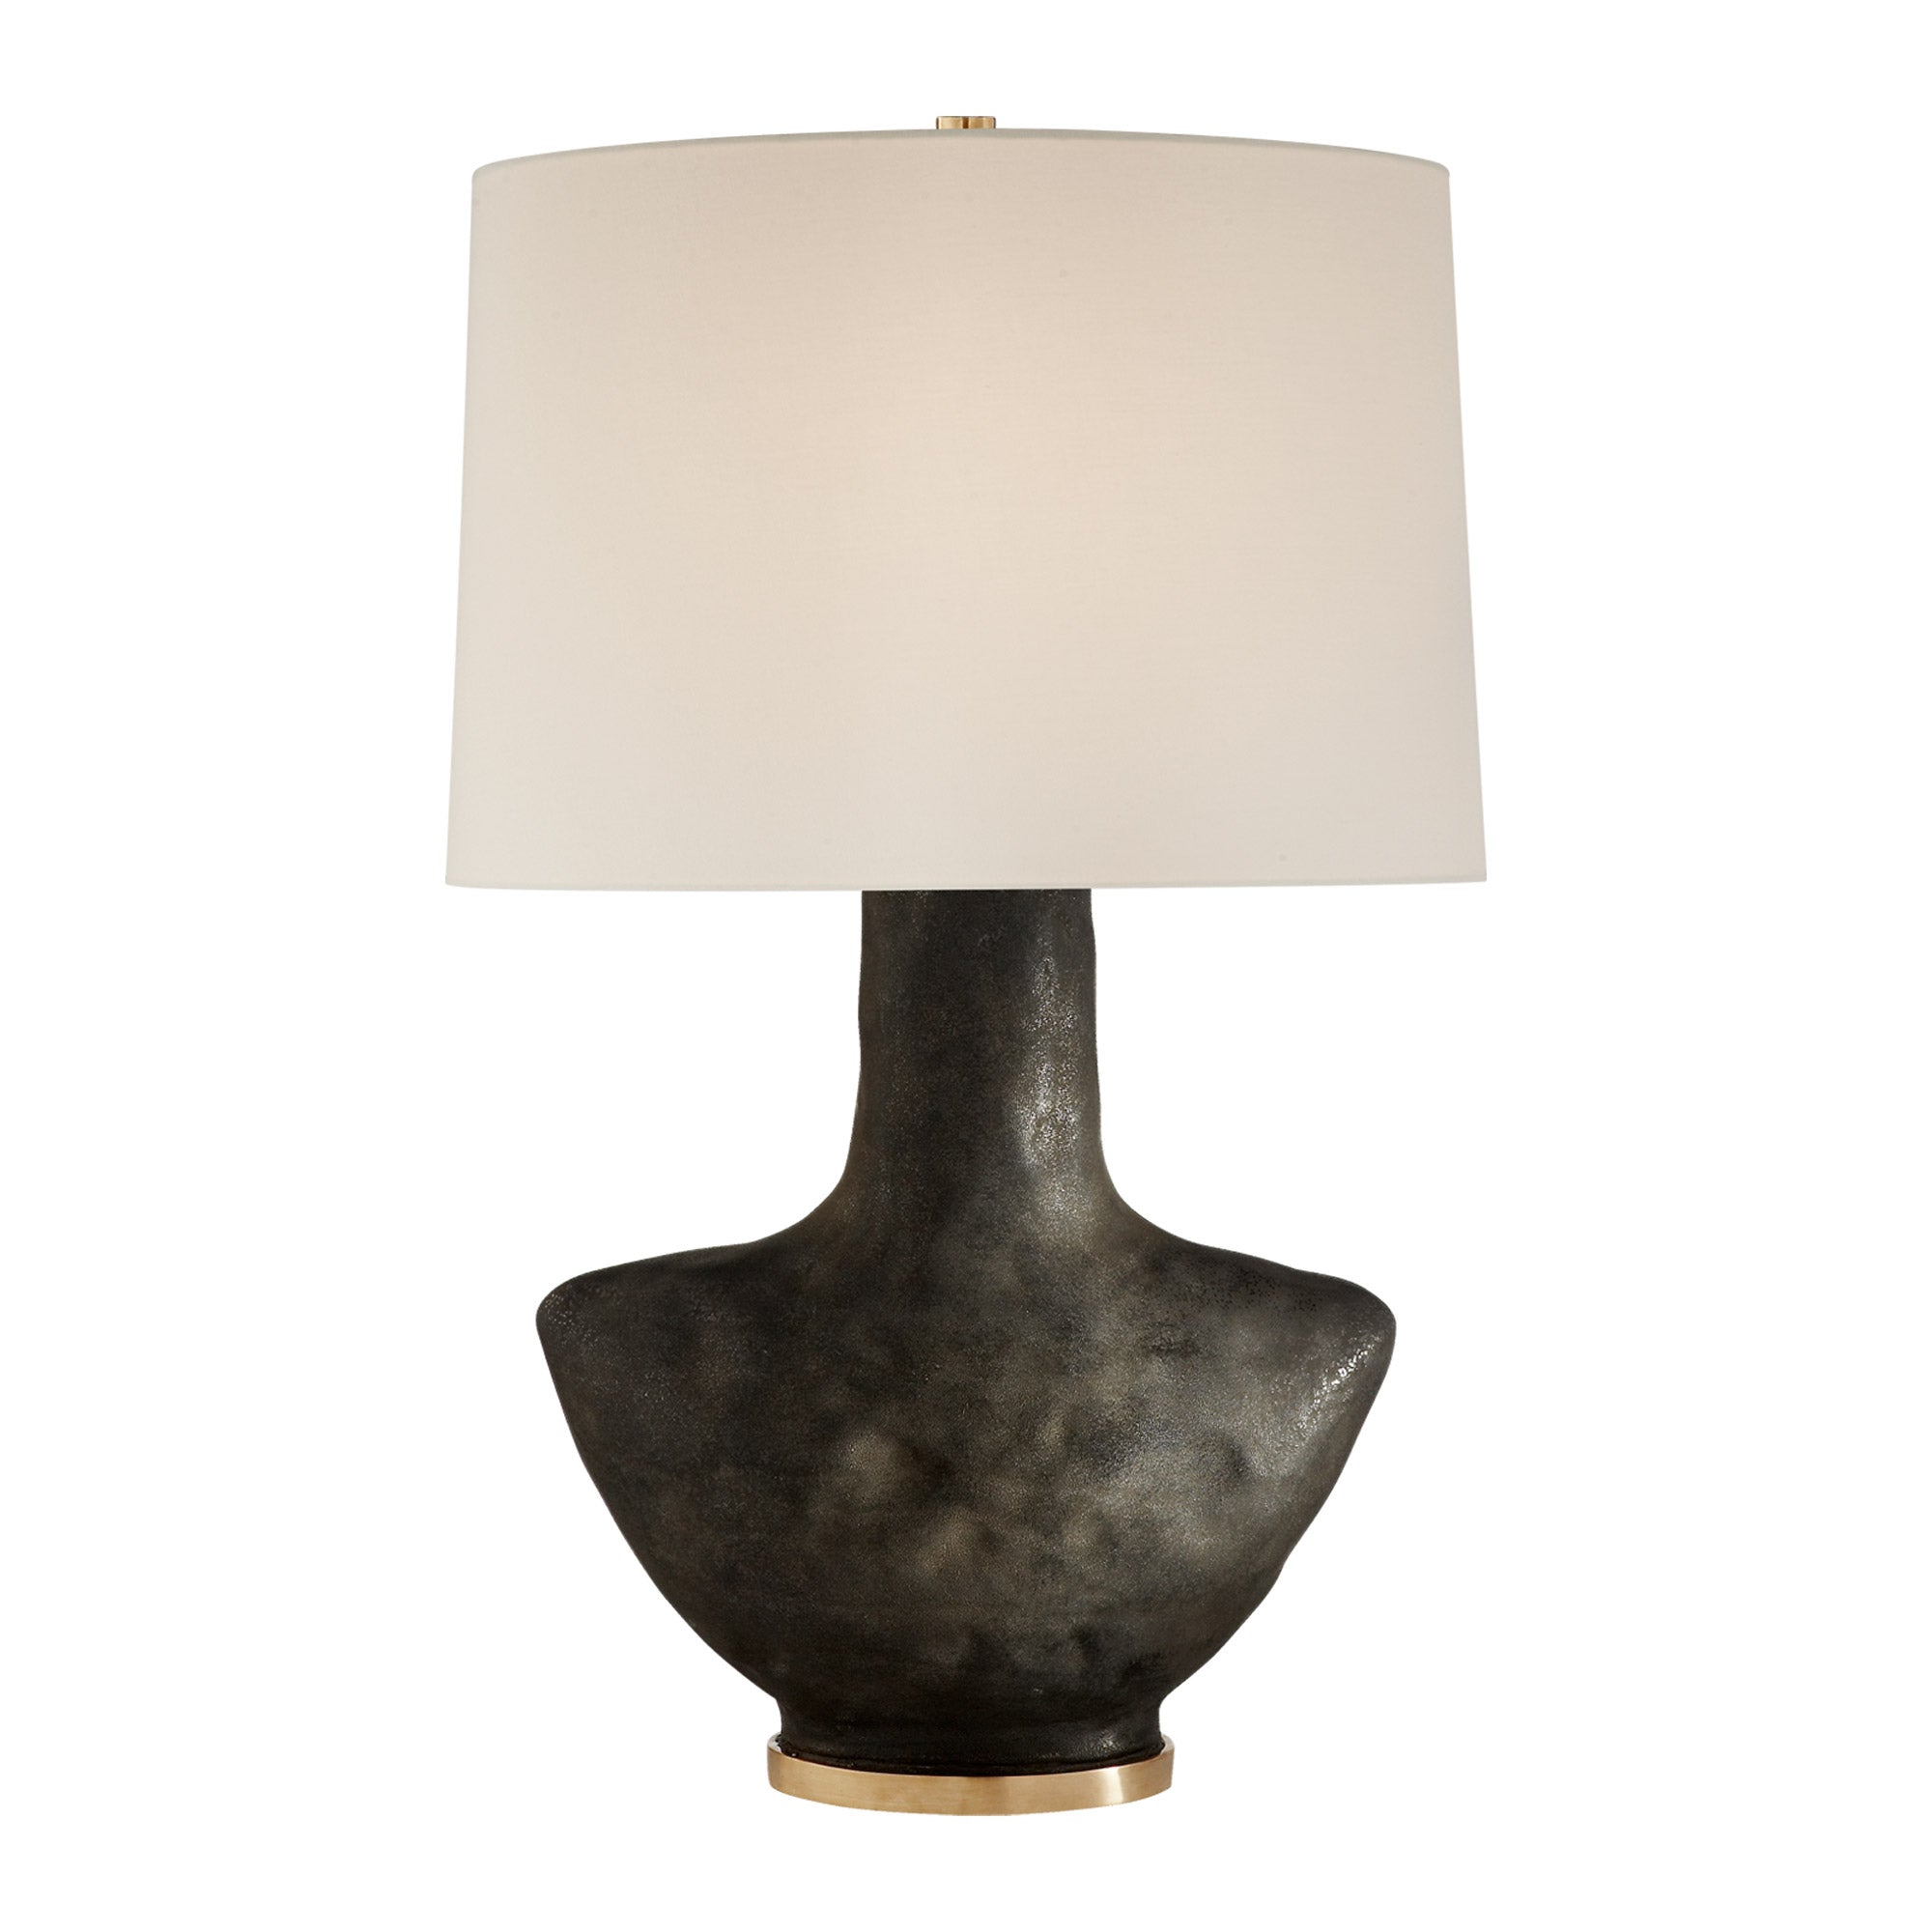 Kelly Wearstler Armato Table Lamp